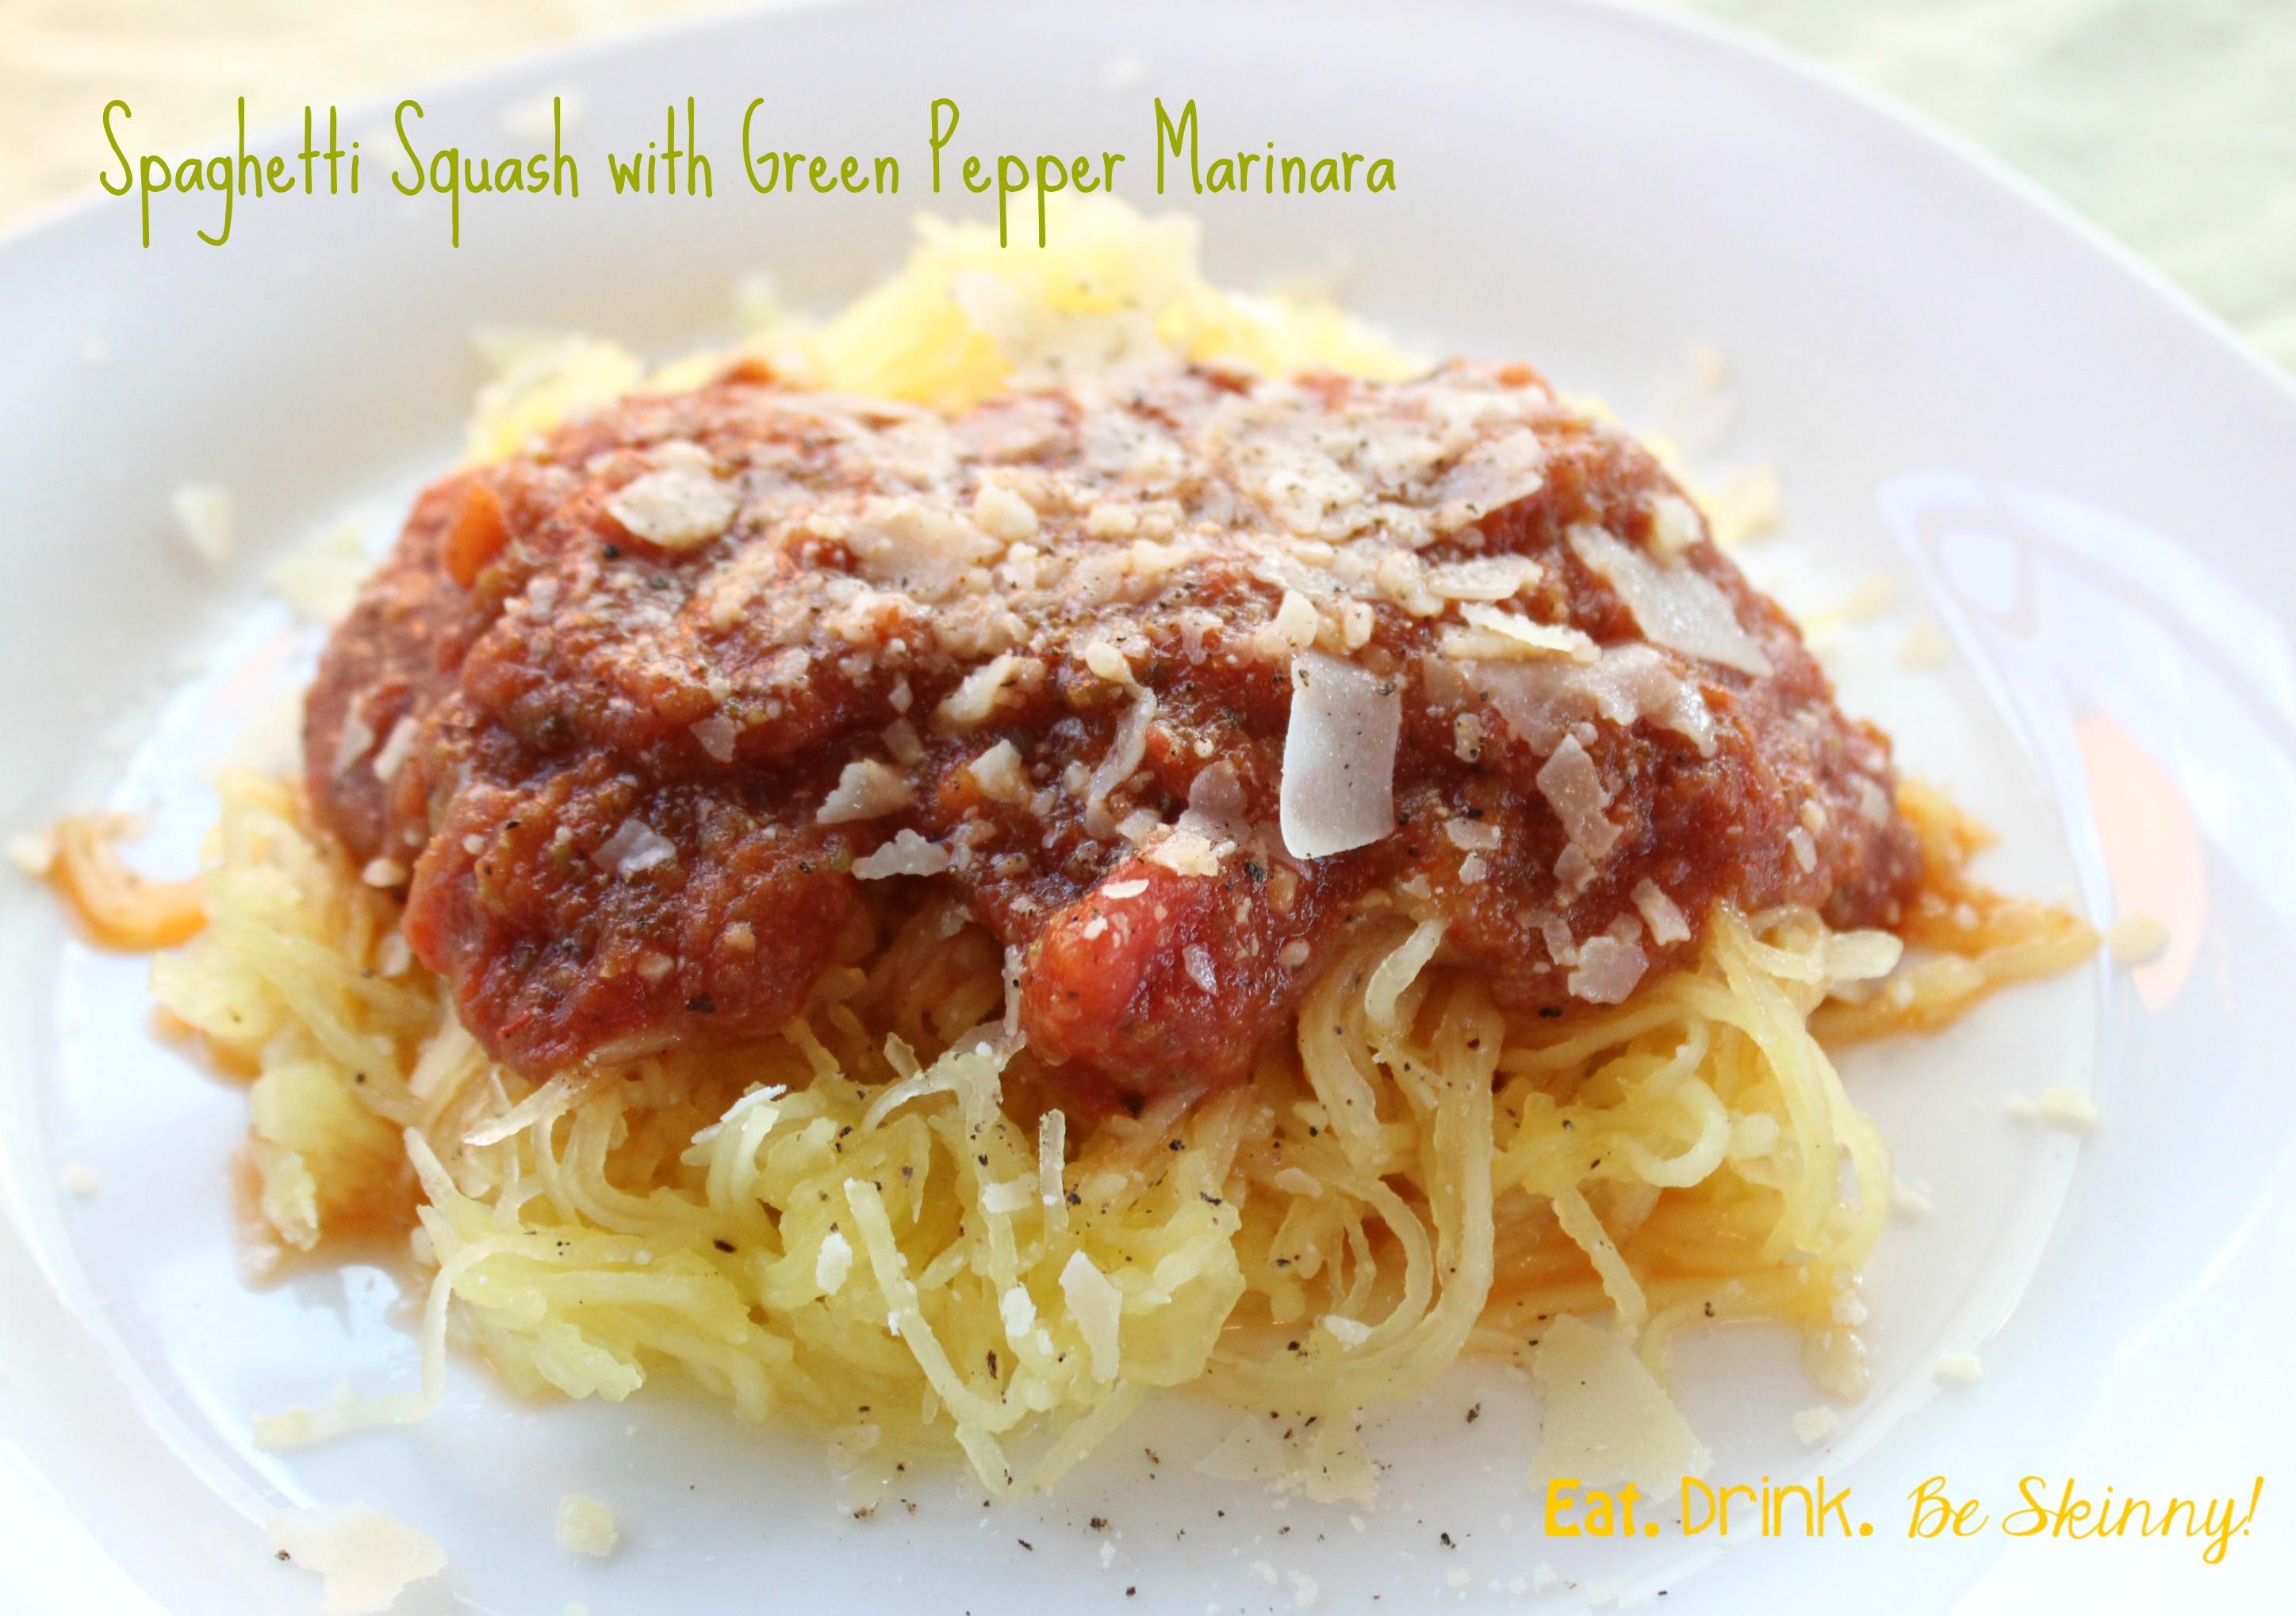 Spaghetti Squash Healthy Recipes the 20 Best Ideas for Healthy Recipe Green Pepper Infused Spaghetti Squash